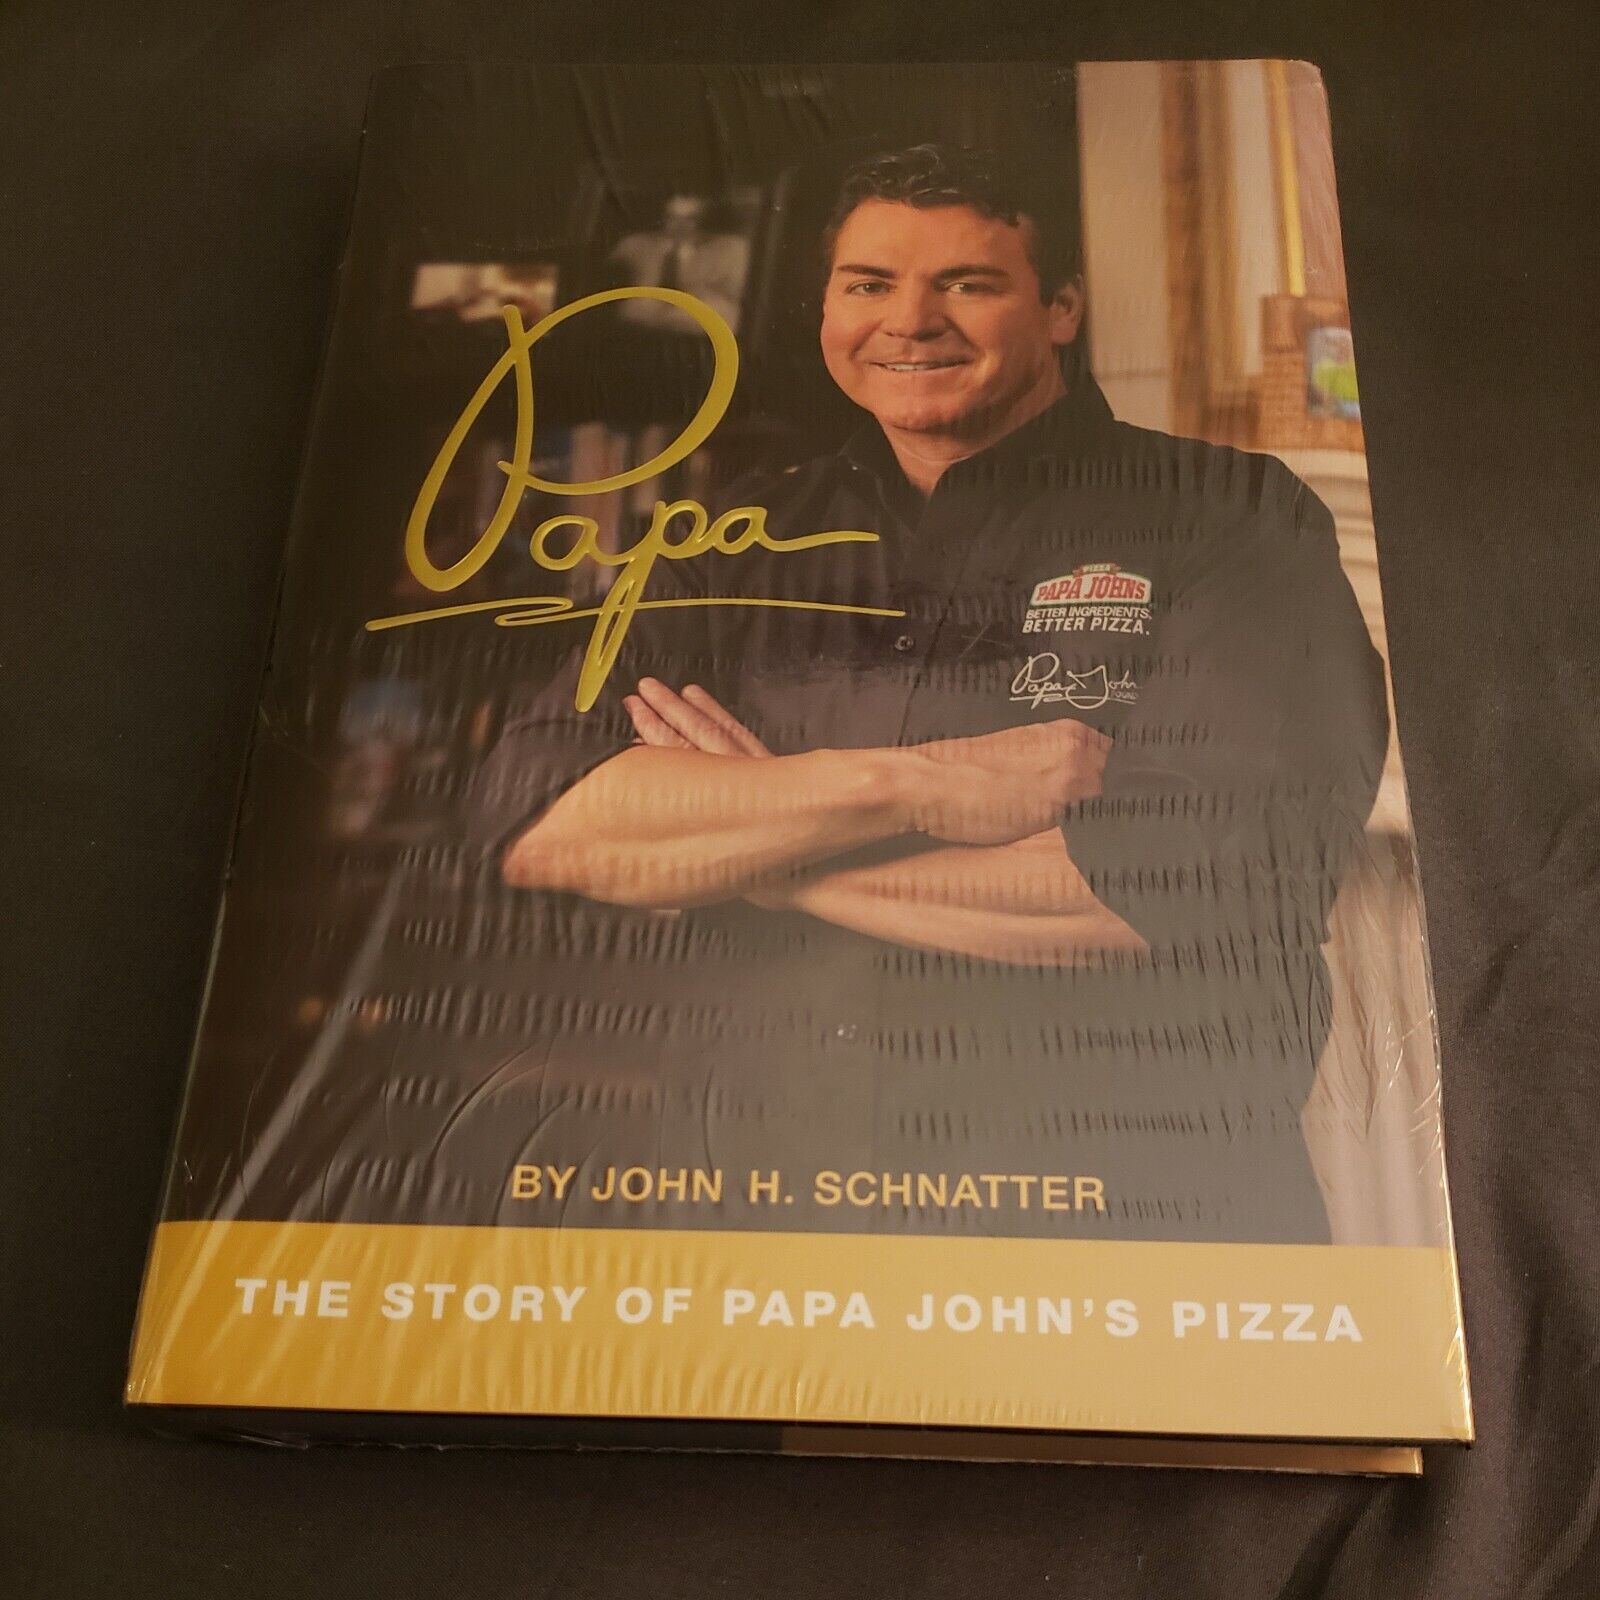 Papa: The Story of Papa John's Pizza by John H. Schnatter